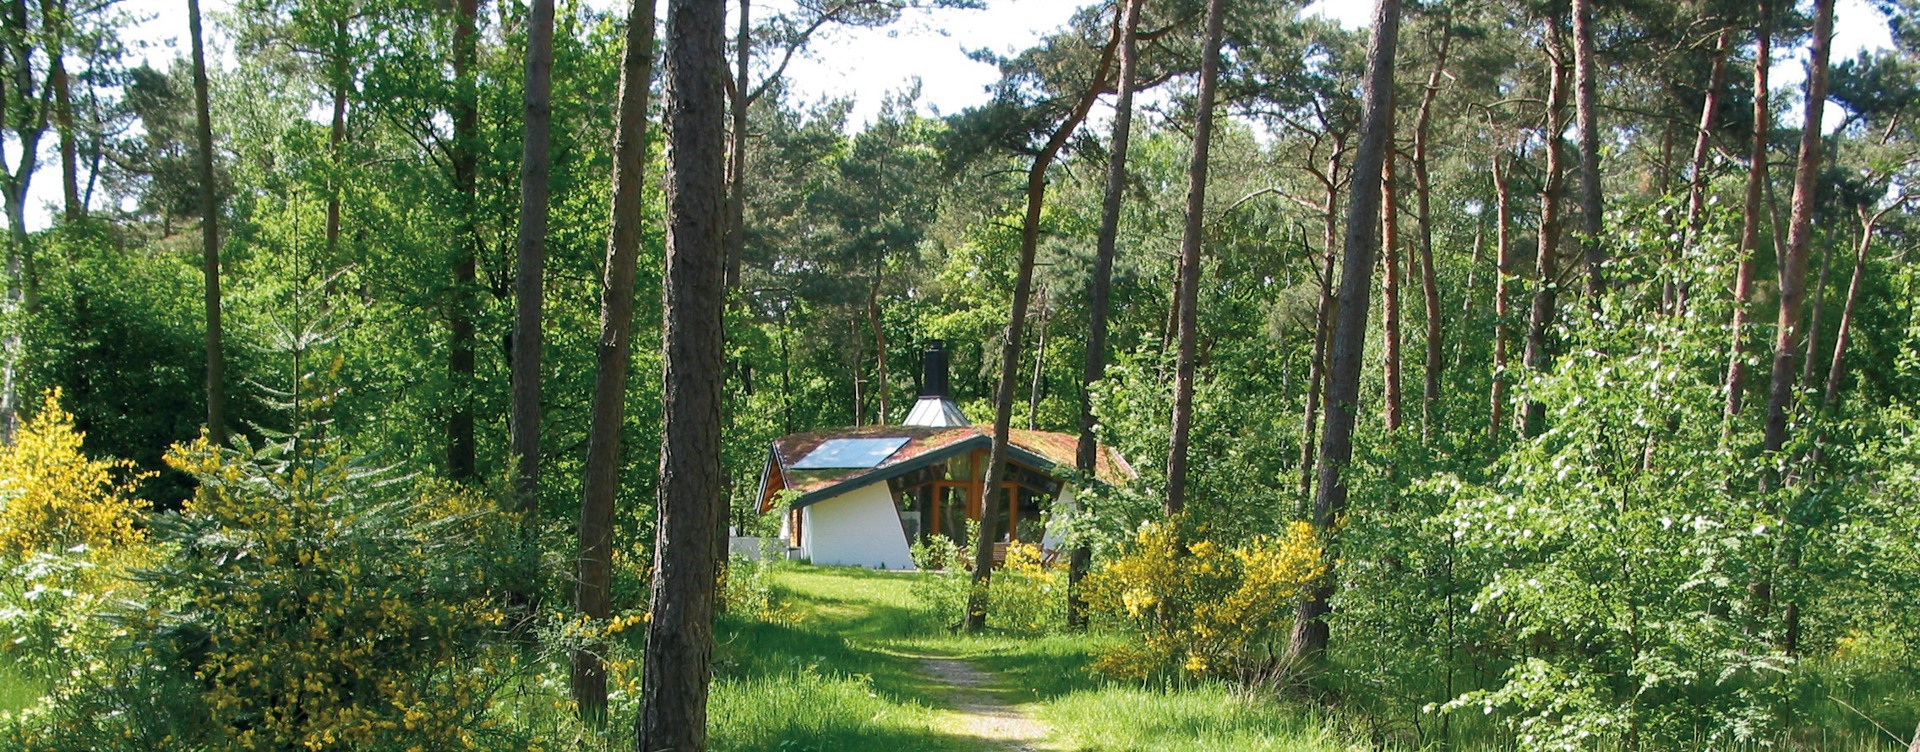 Summio Bungalowpark Herperduin, Nordbrabant